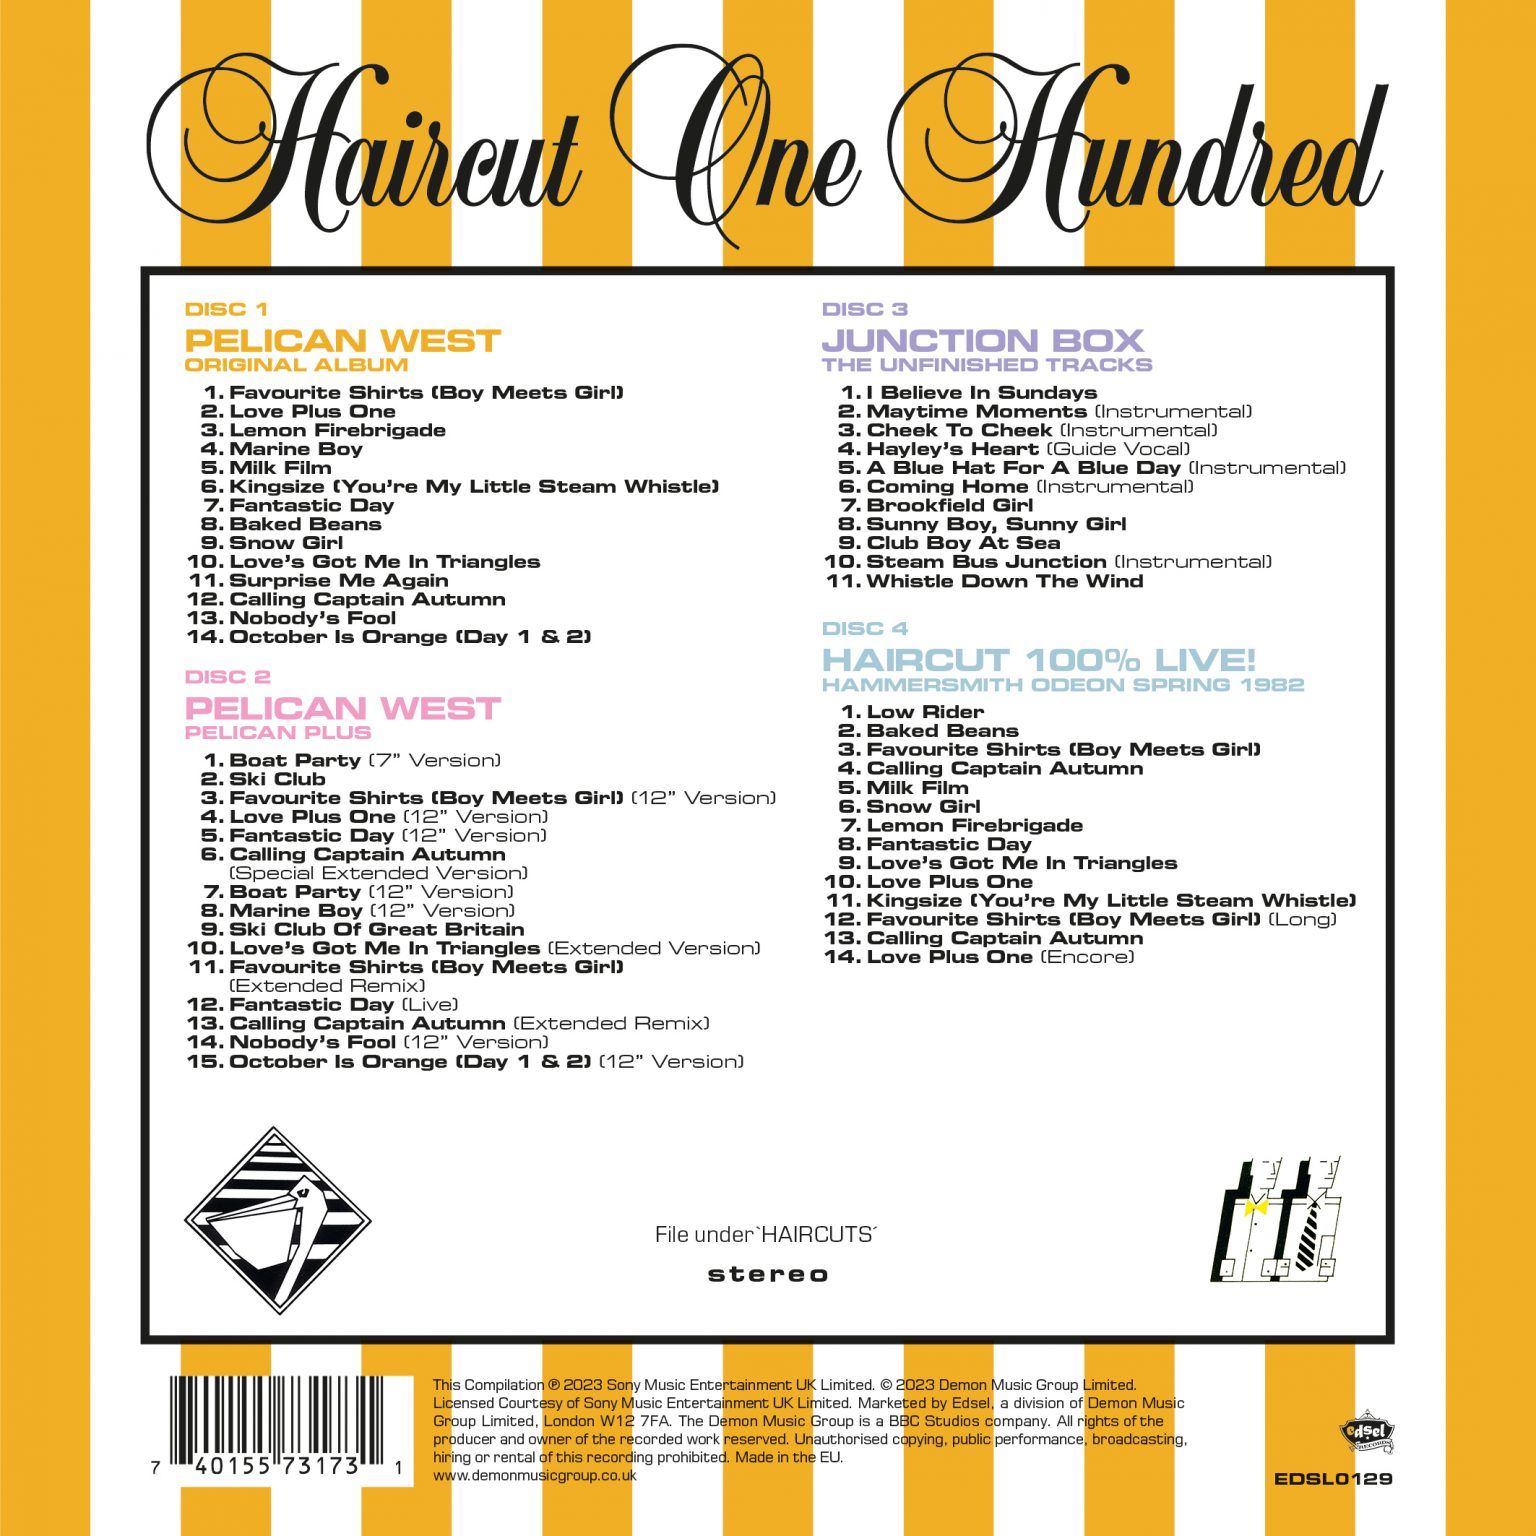 EDSL0129 Haircut 100 Pelican West 4-CD Celebration Edition Back Cover